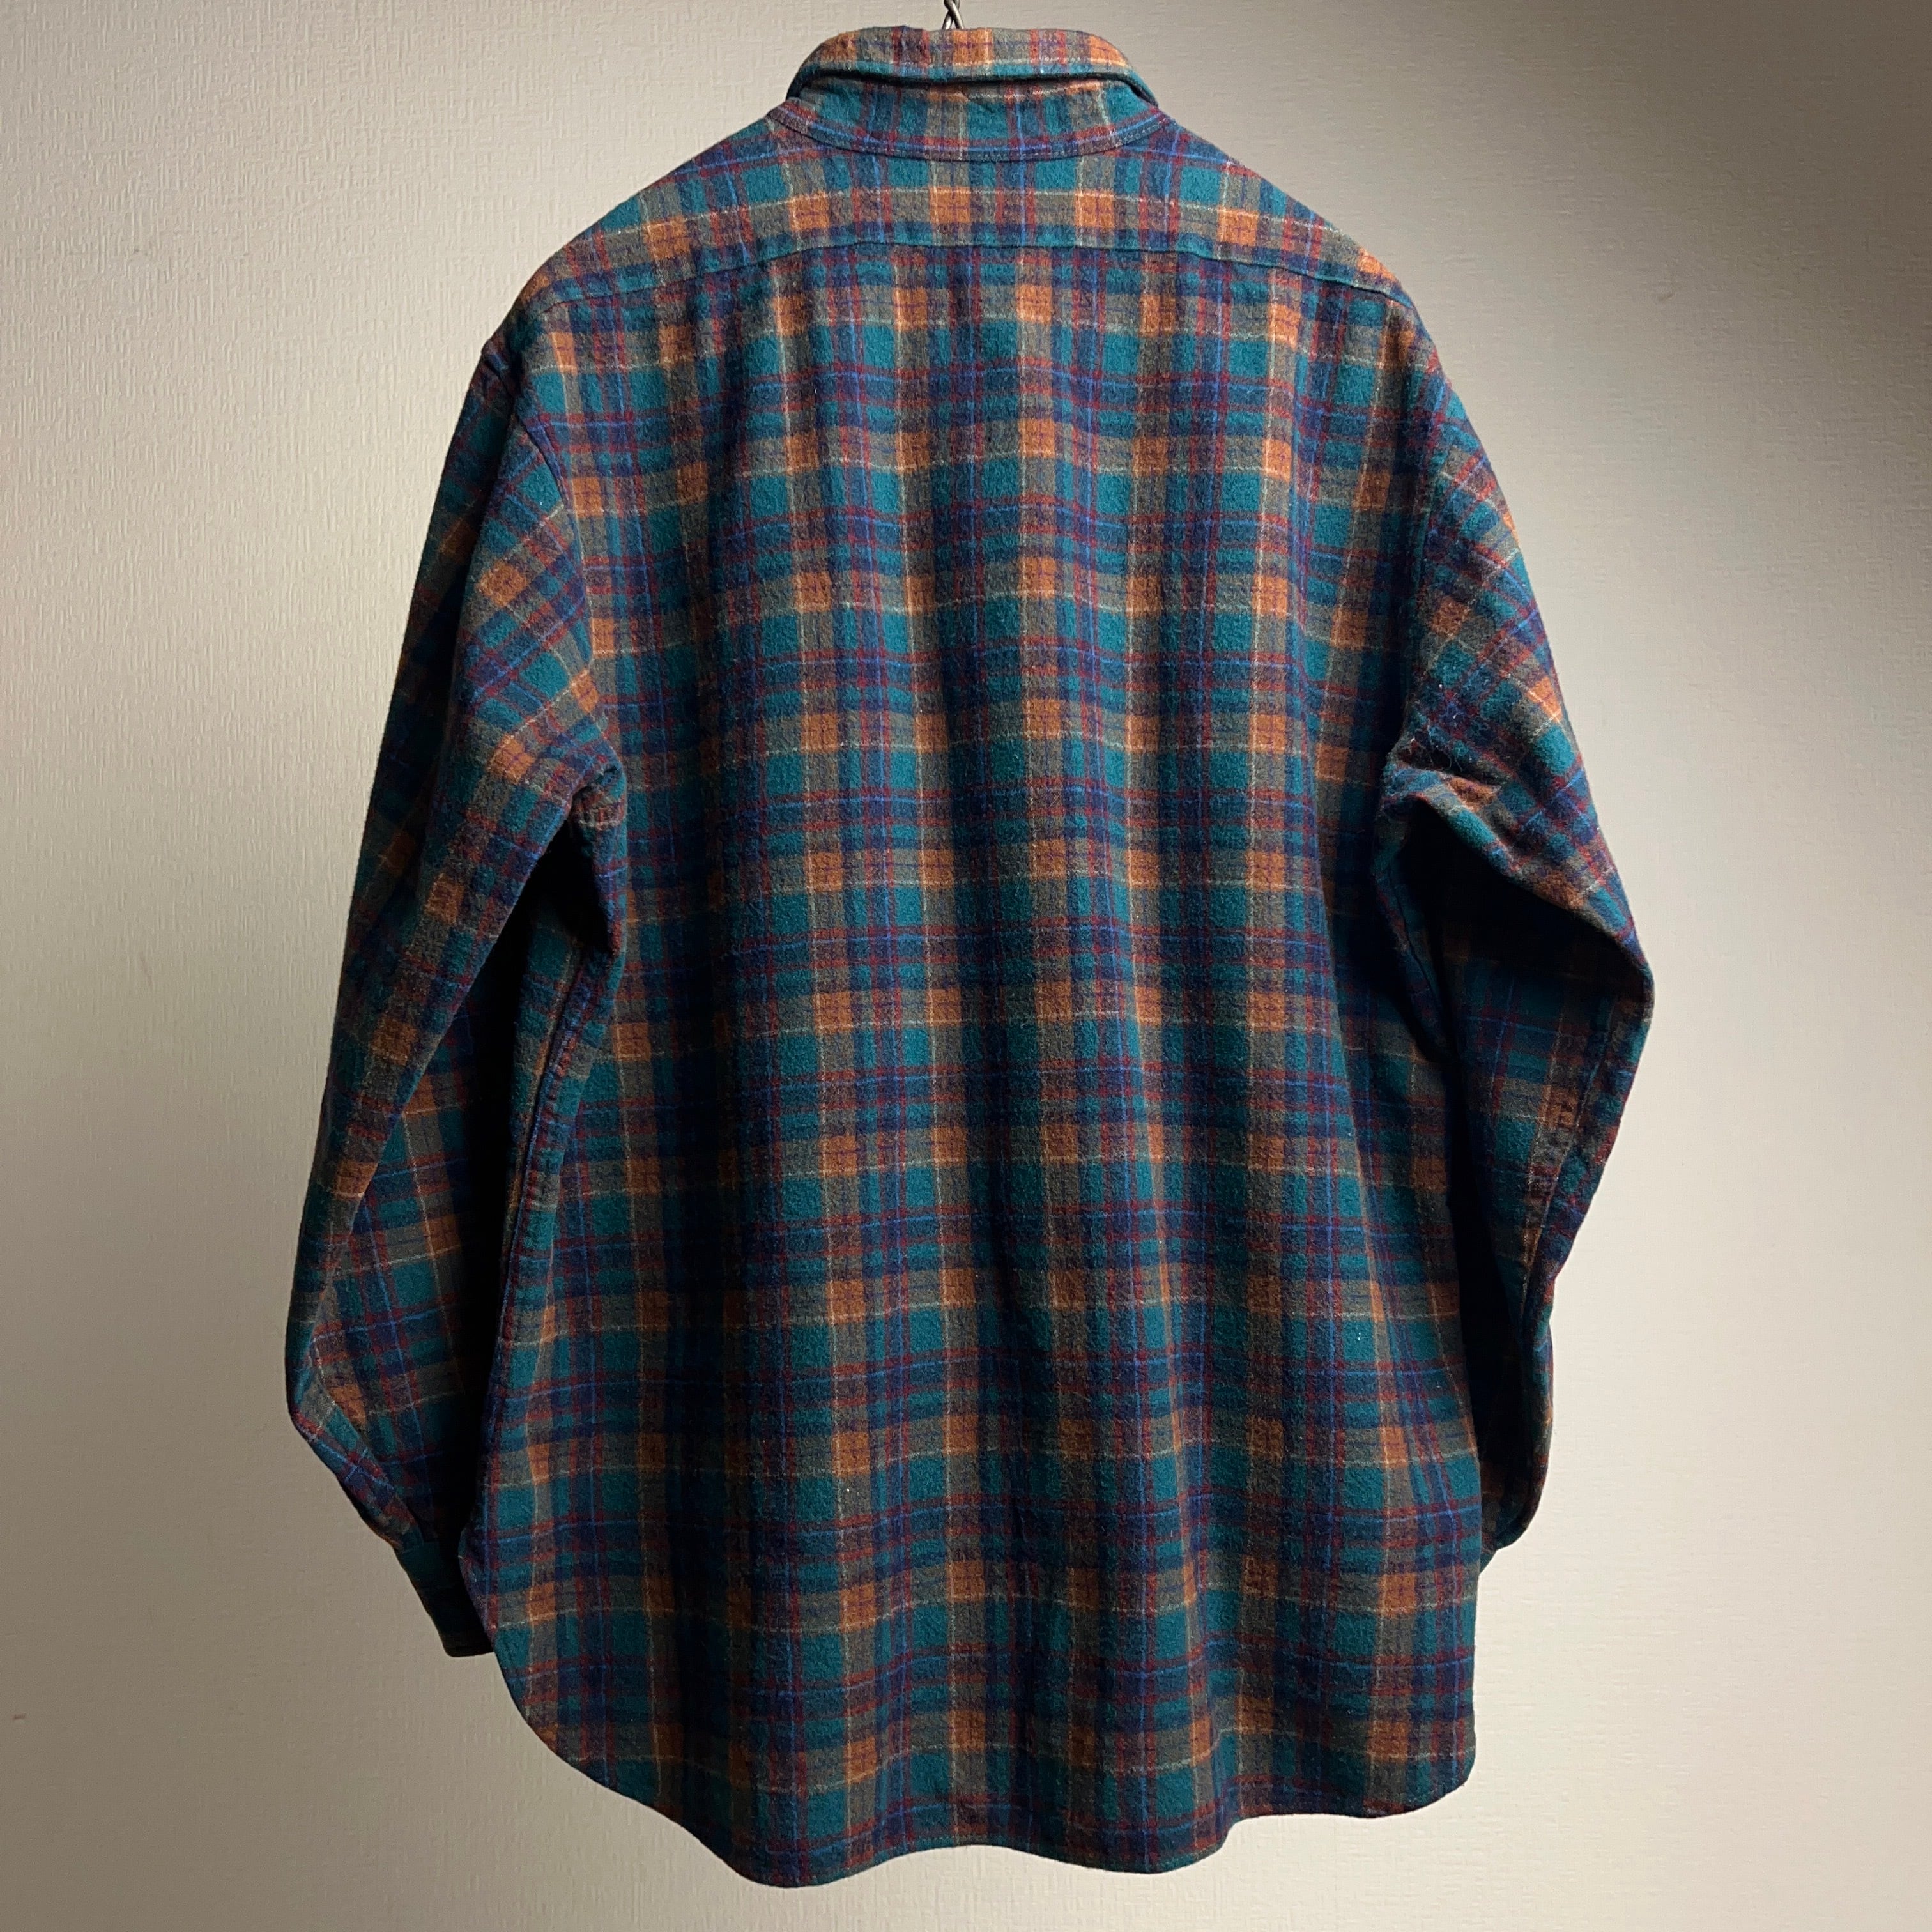 70's~80's “PENDLETON” Plaid Wool Shirt SIZE XL USA製 70年代 80年代 ペンドルトン  ウールチェックシャツ 長袖【0929A25】【送料無料】